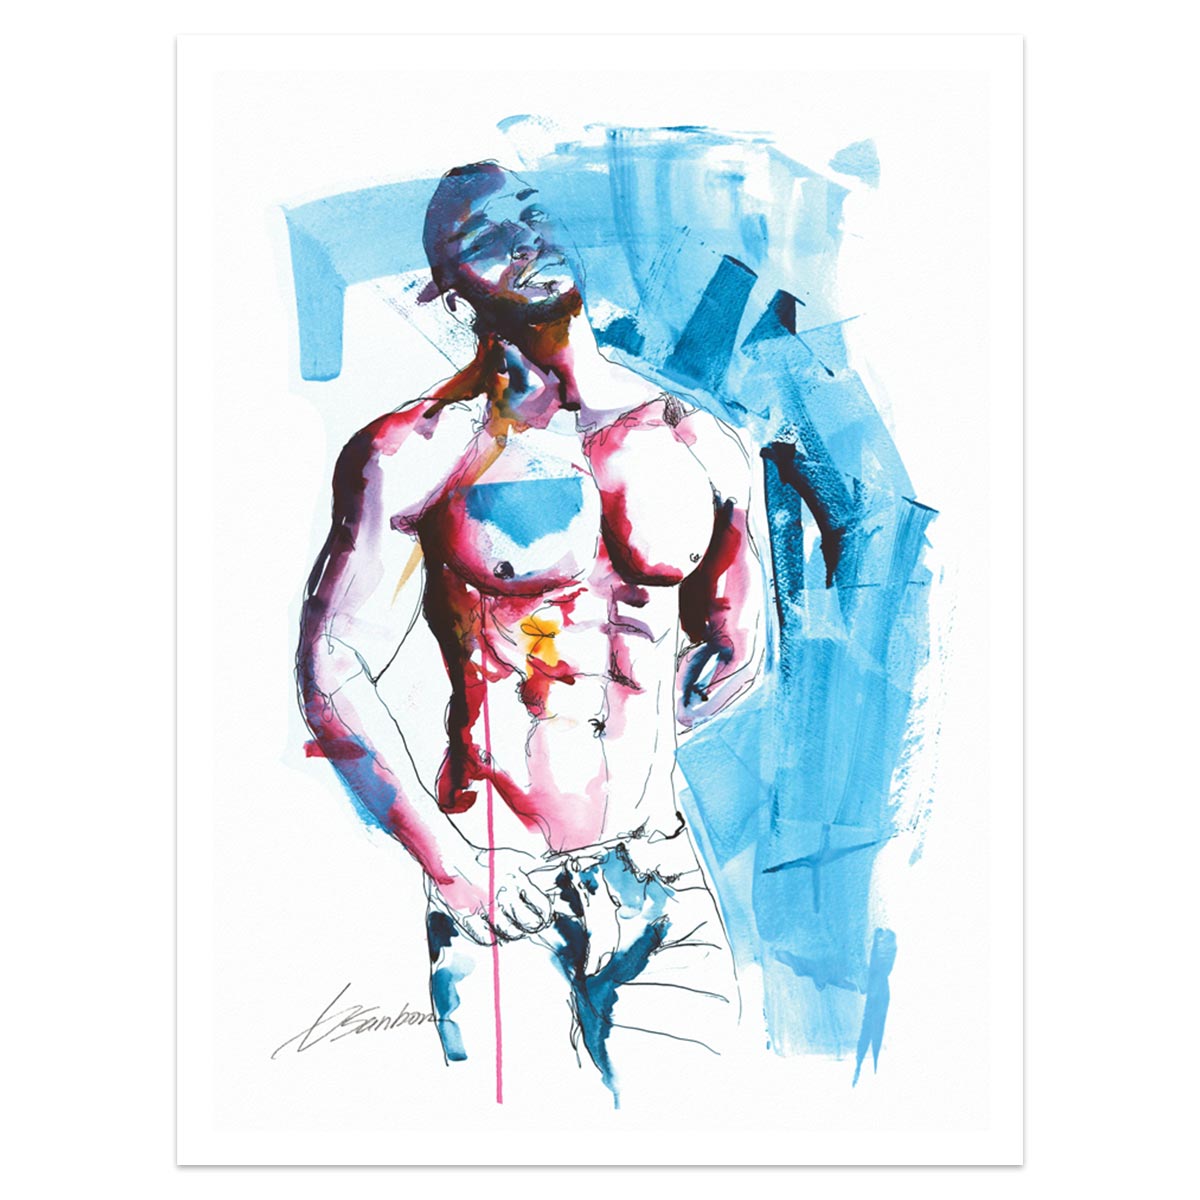 Radiant Male Muscular Figure Basking in Blue Hues - Giclee Art Print